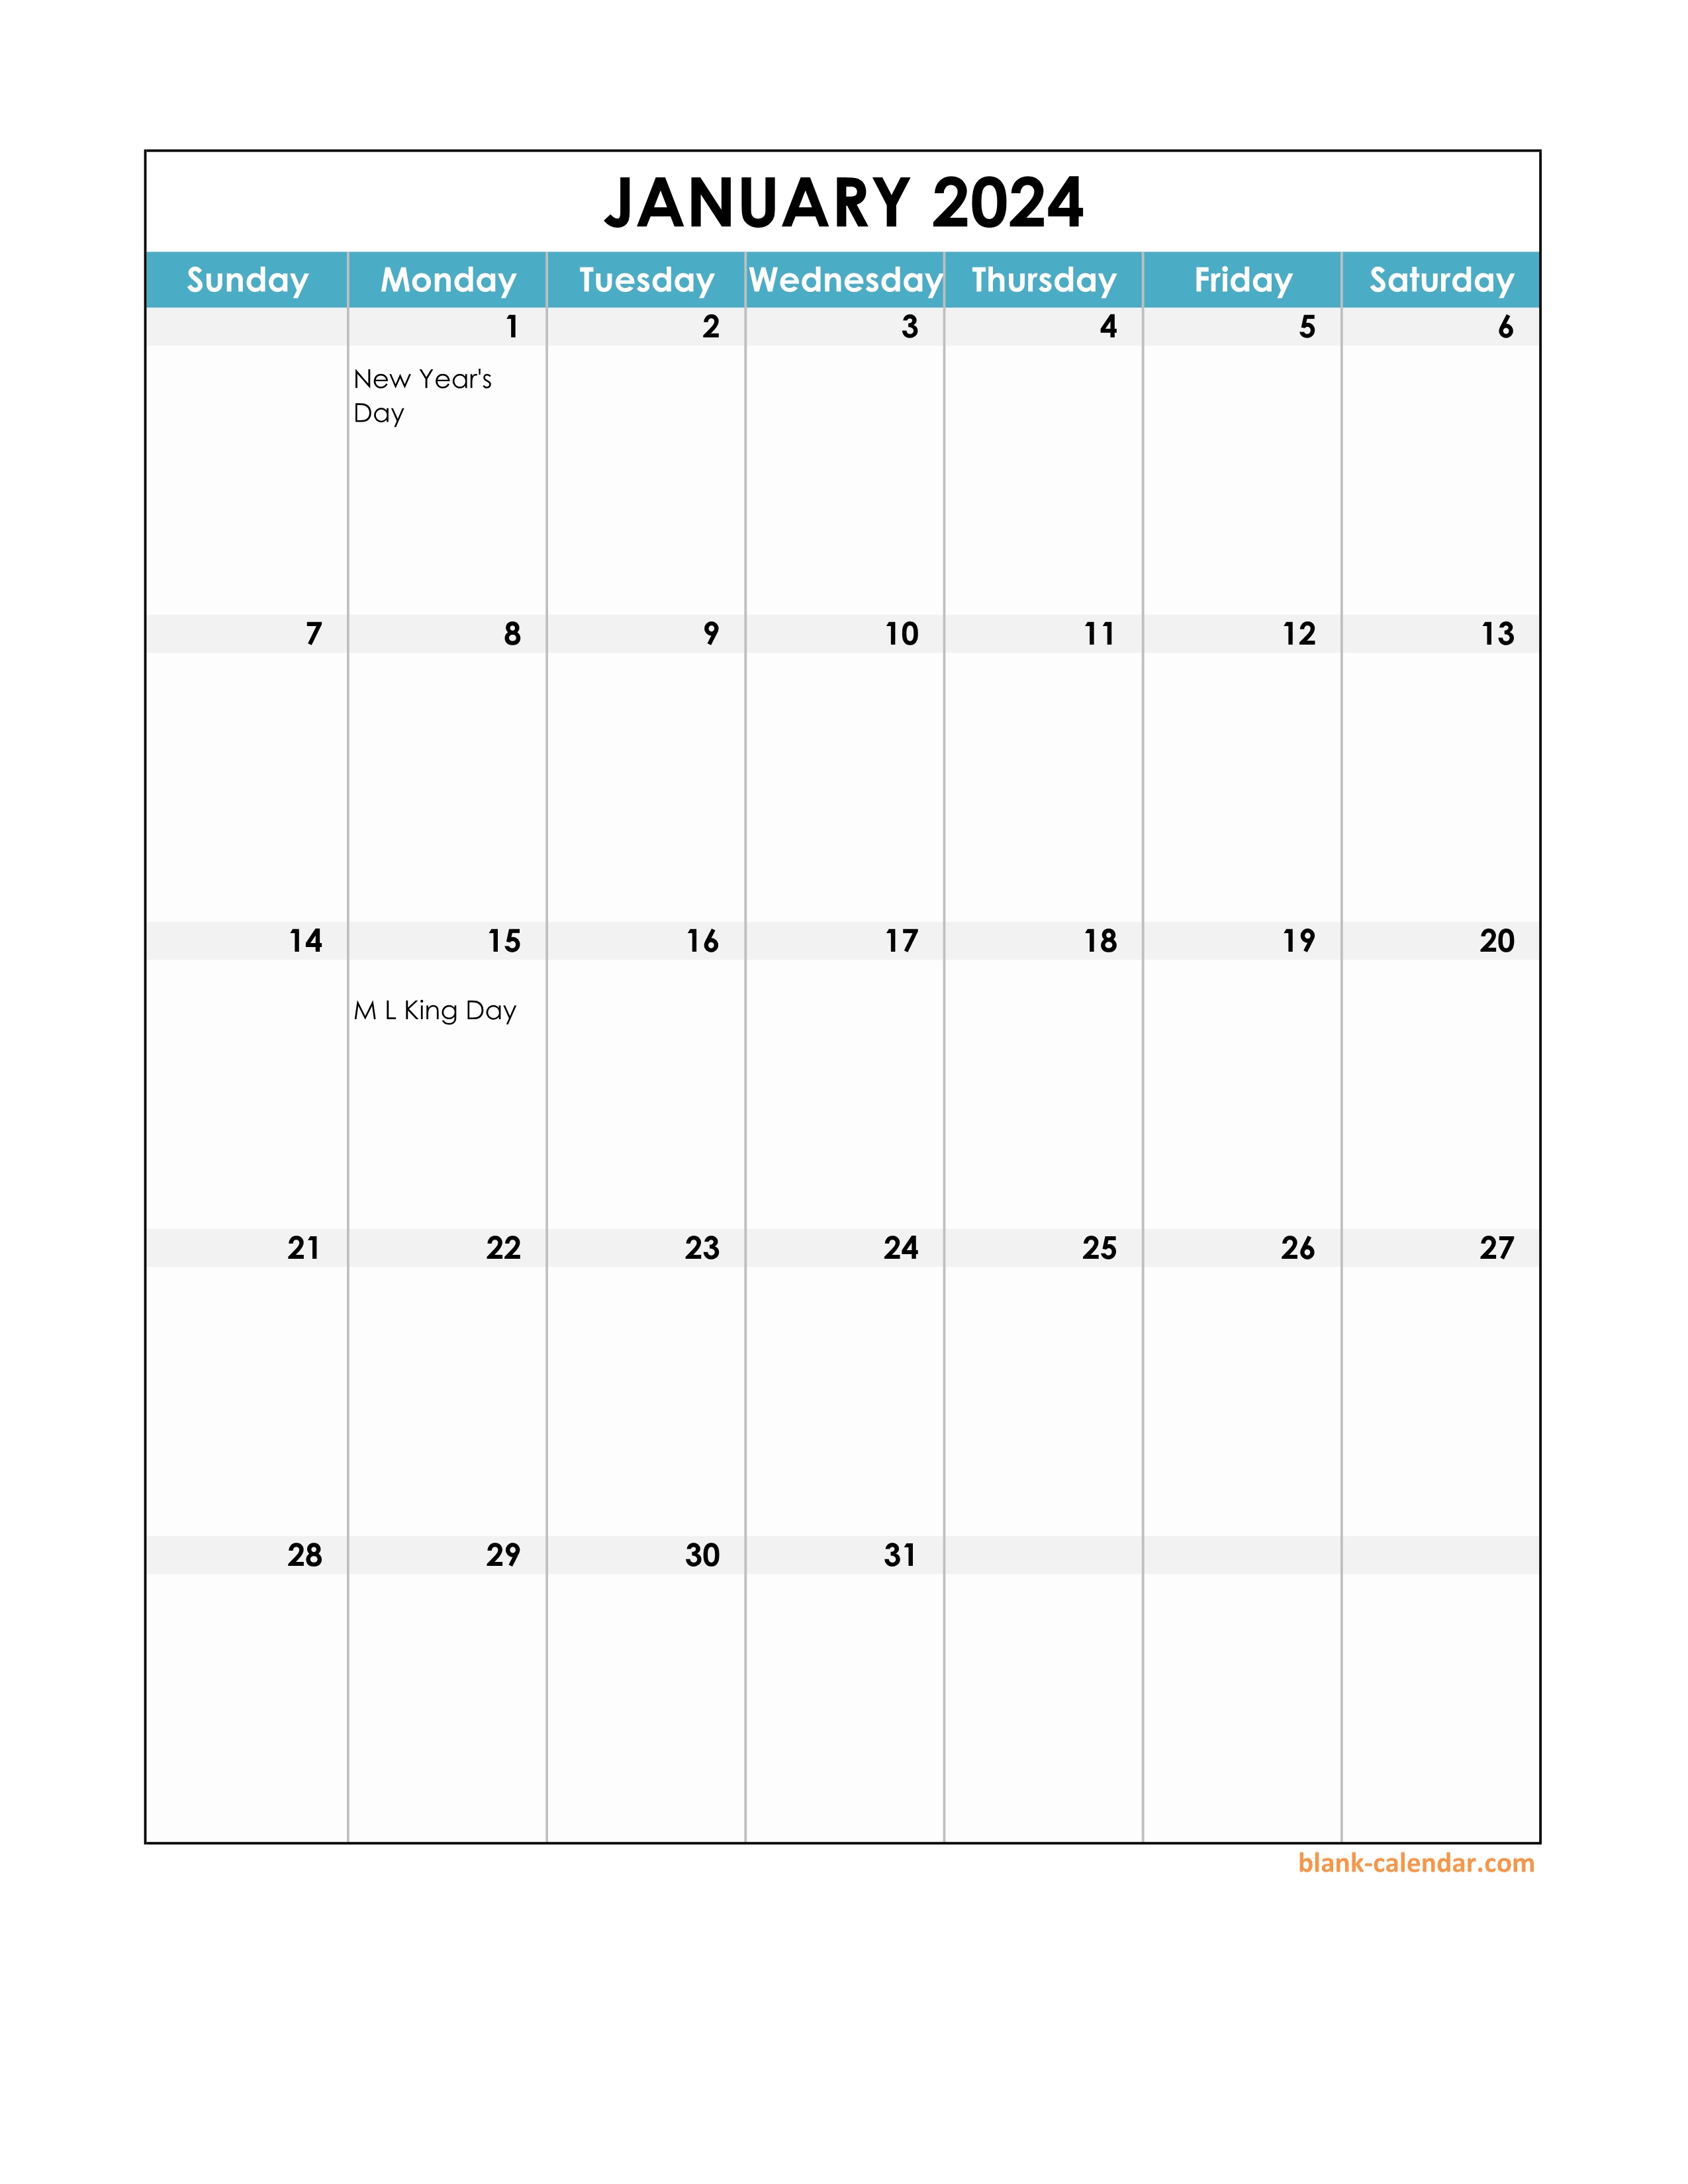 Work Holiday Calendar 2024 Excel Sharl Demetris